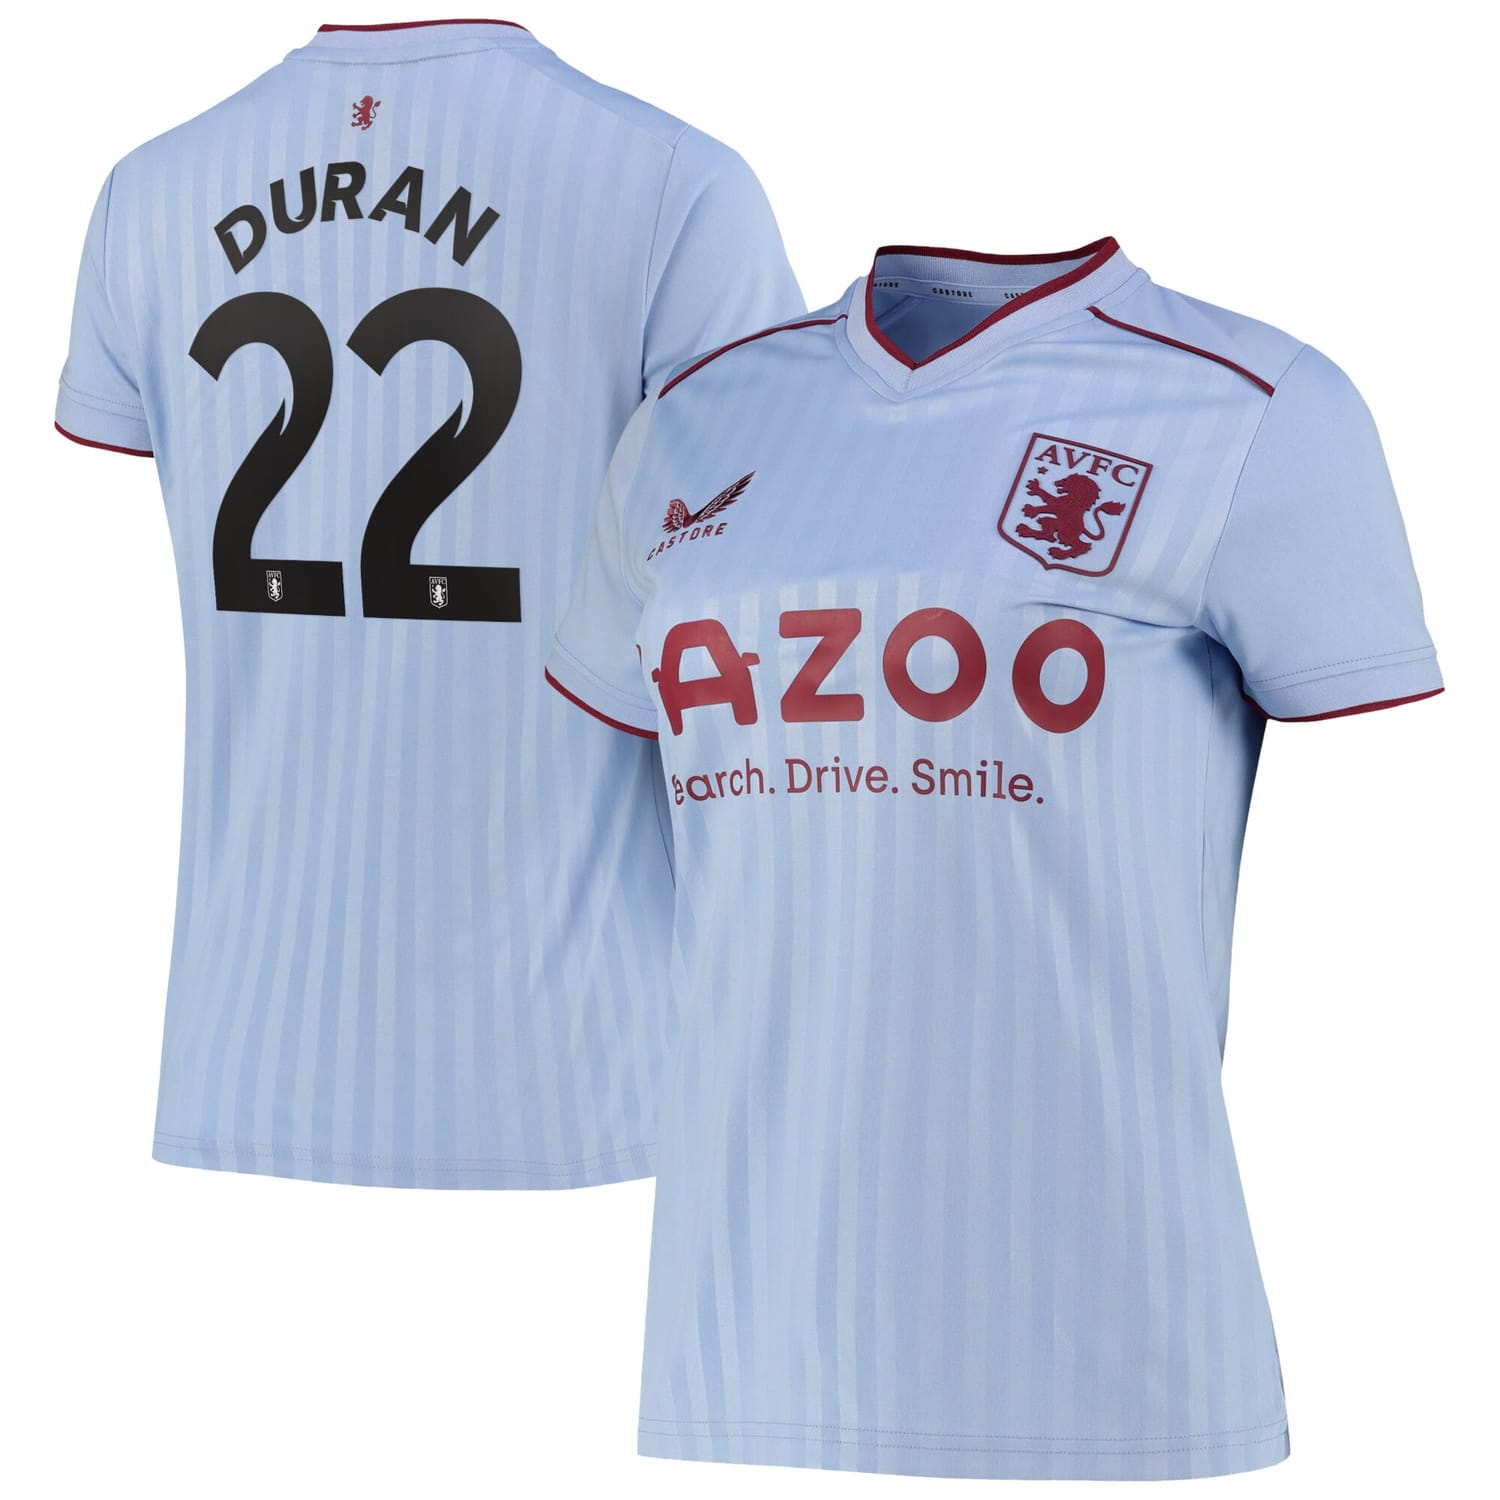 Premier League Aston Villa Away Cup Jersey Shirt 2022-23 player Duran 22 printing for Women